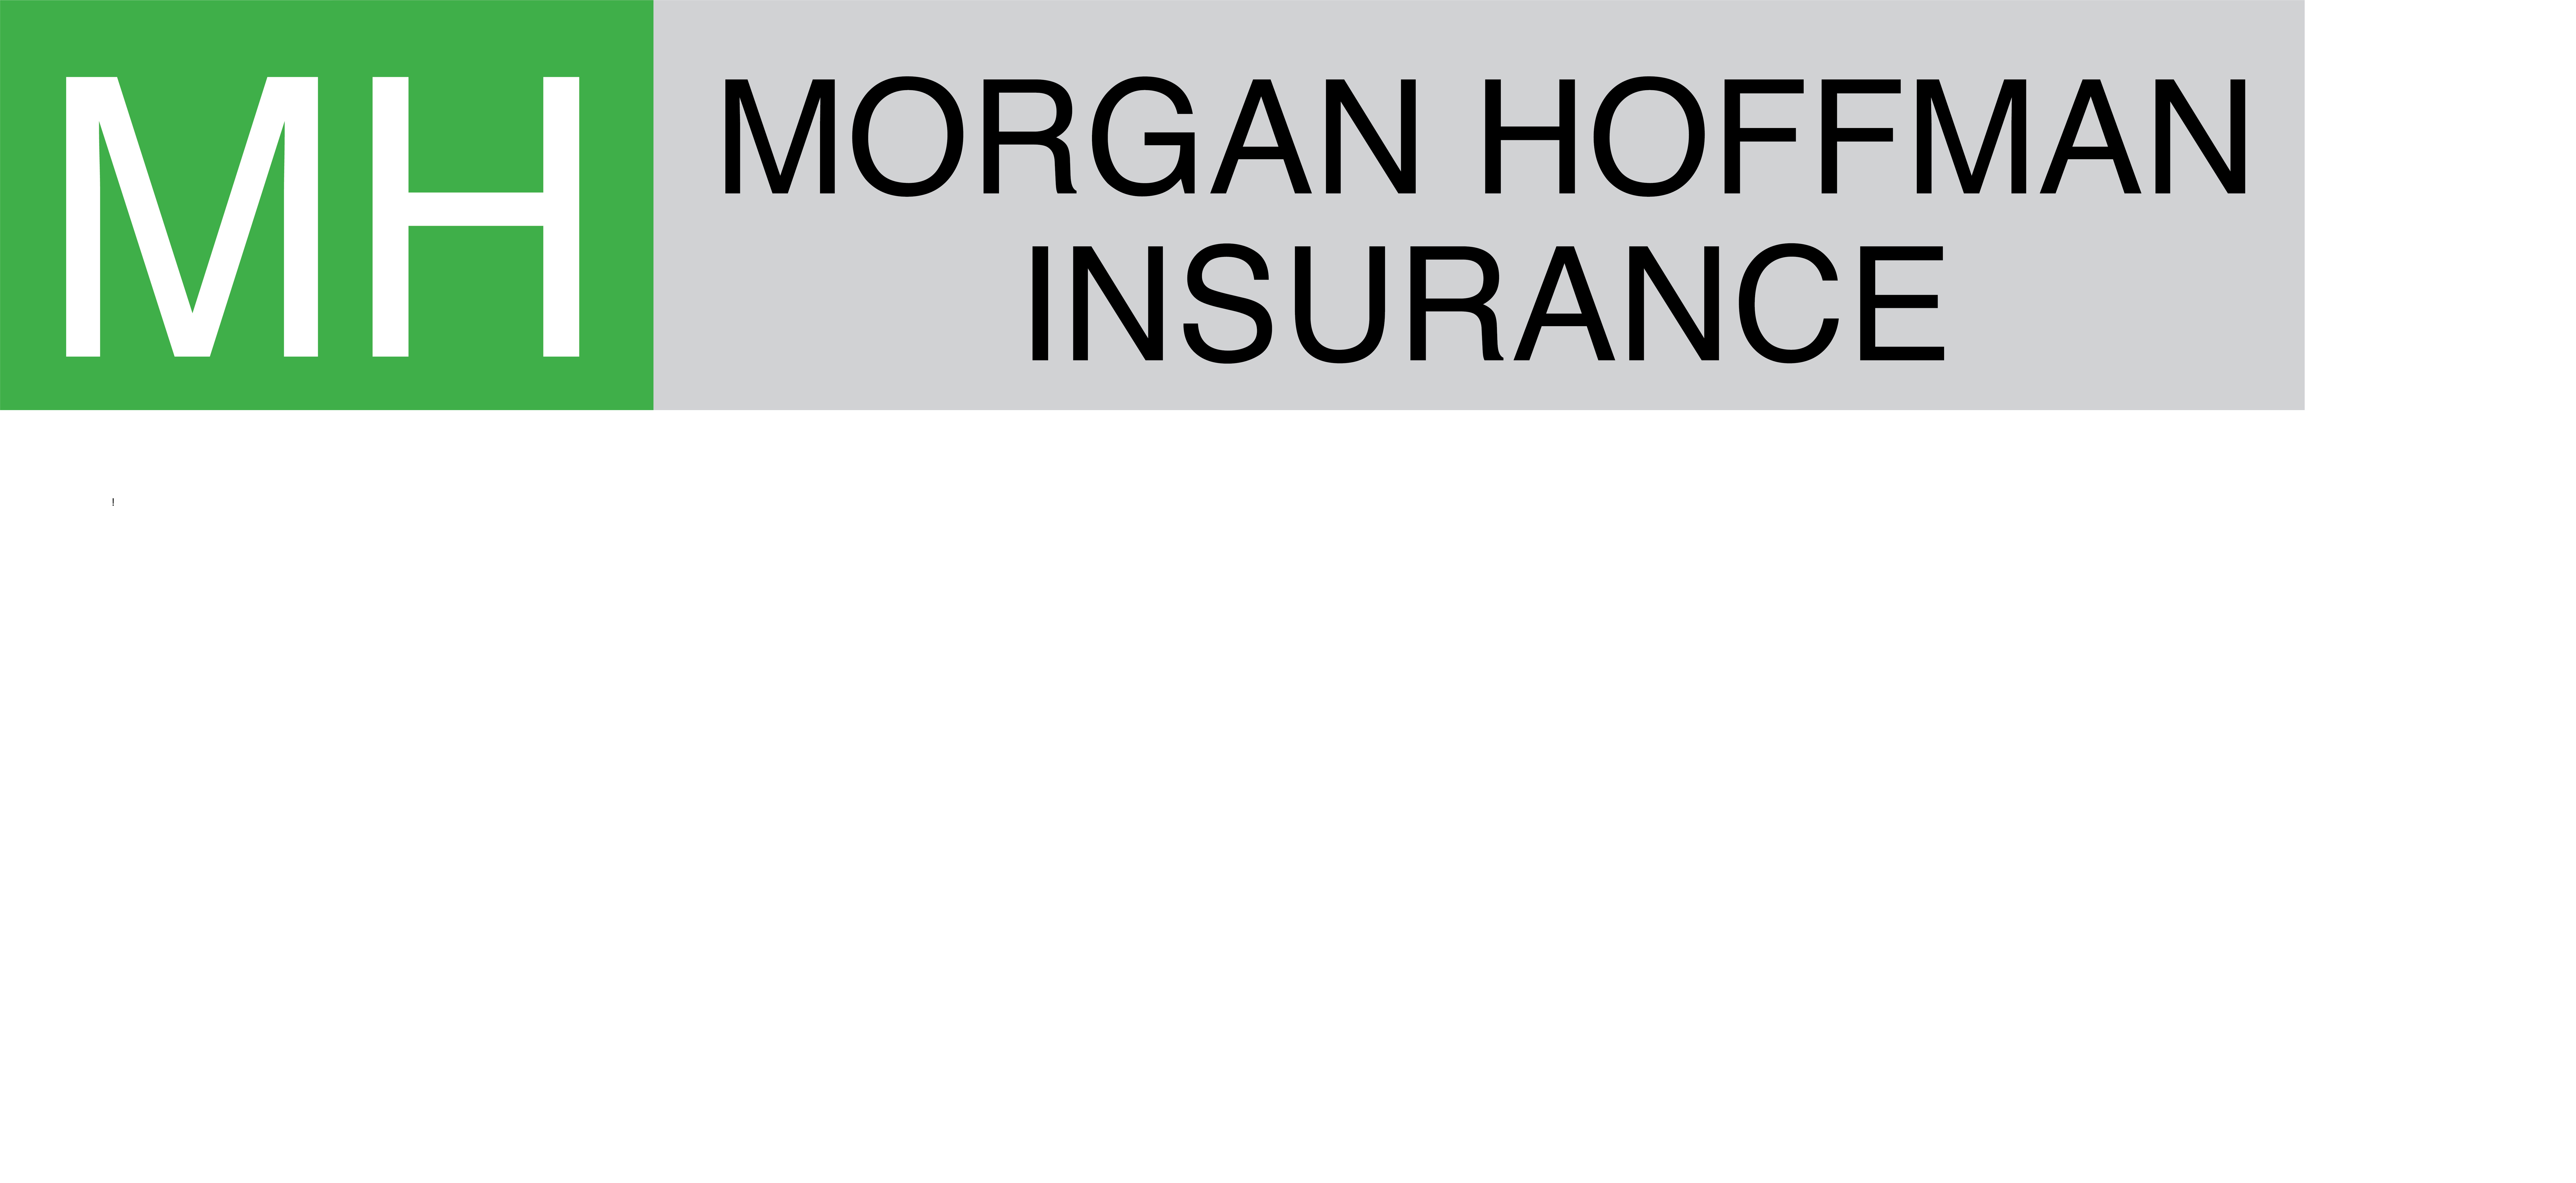 Morgan Hoffman Insurance